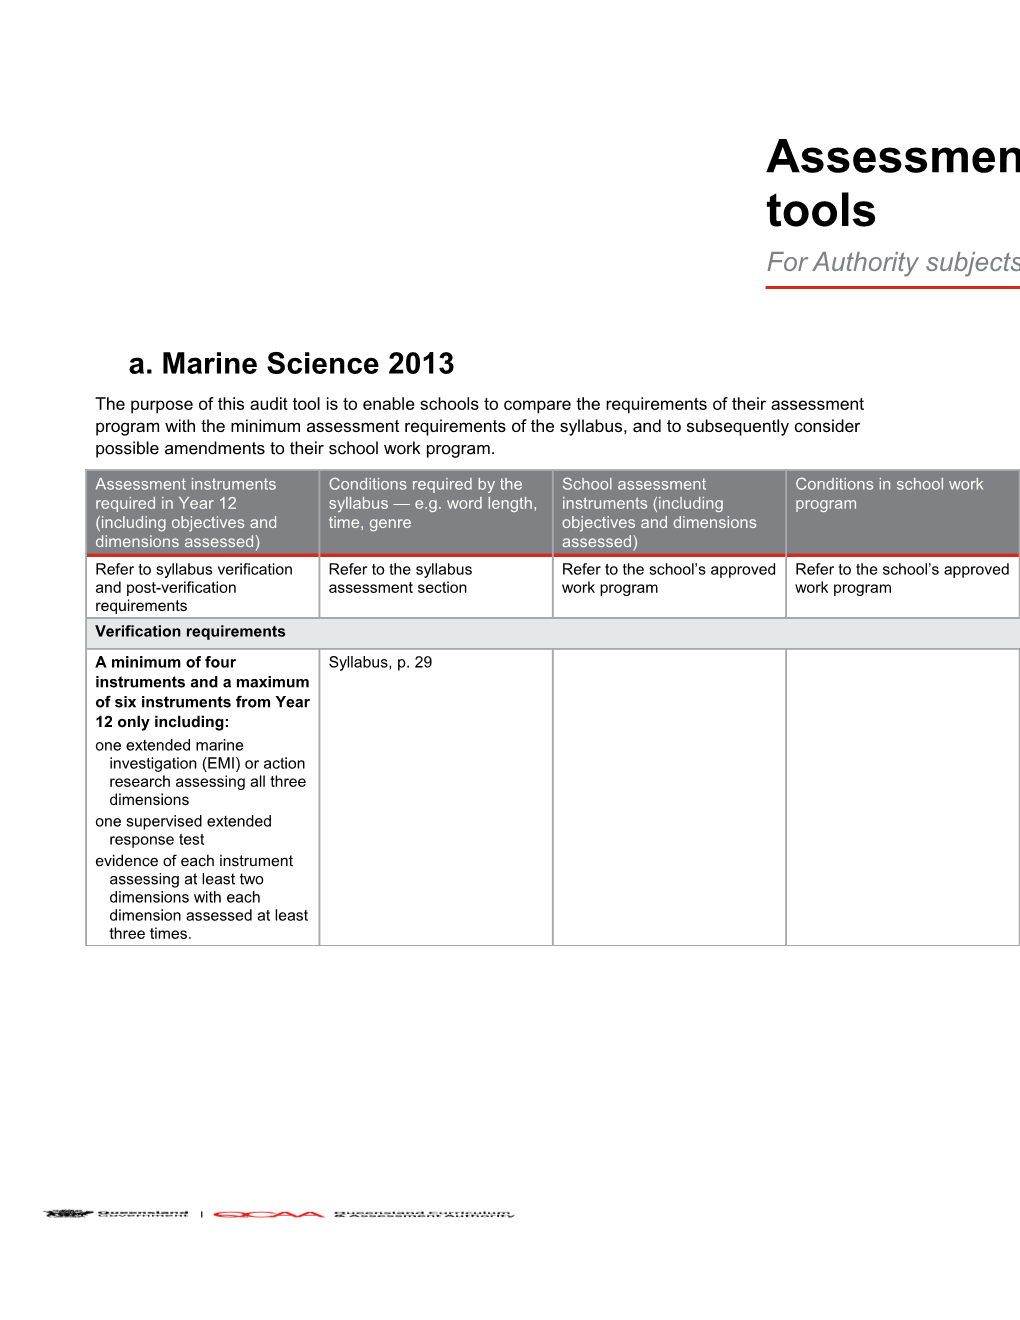 Marine Science 2013 Assessment Program Audit Tool